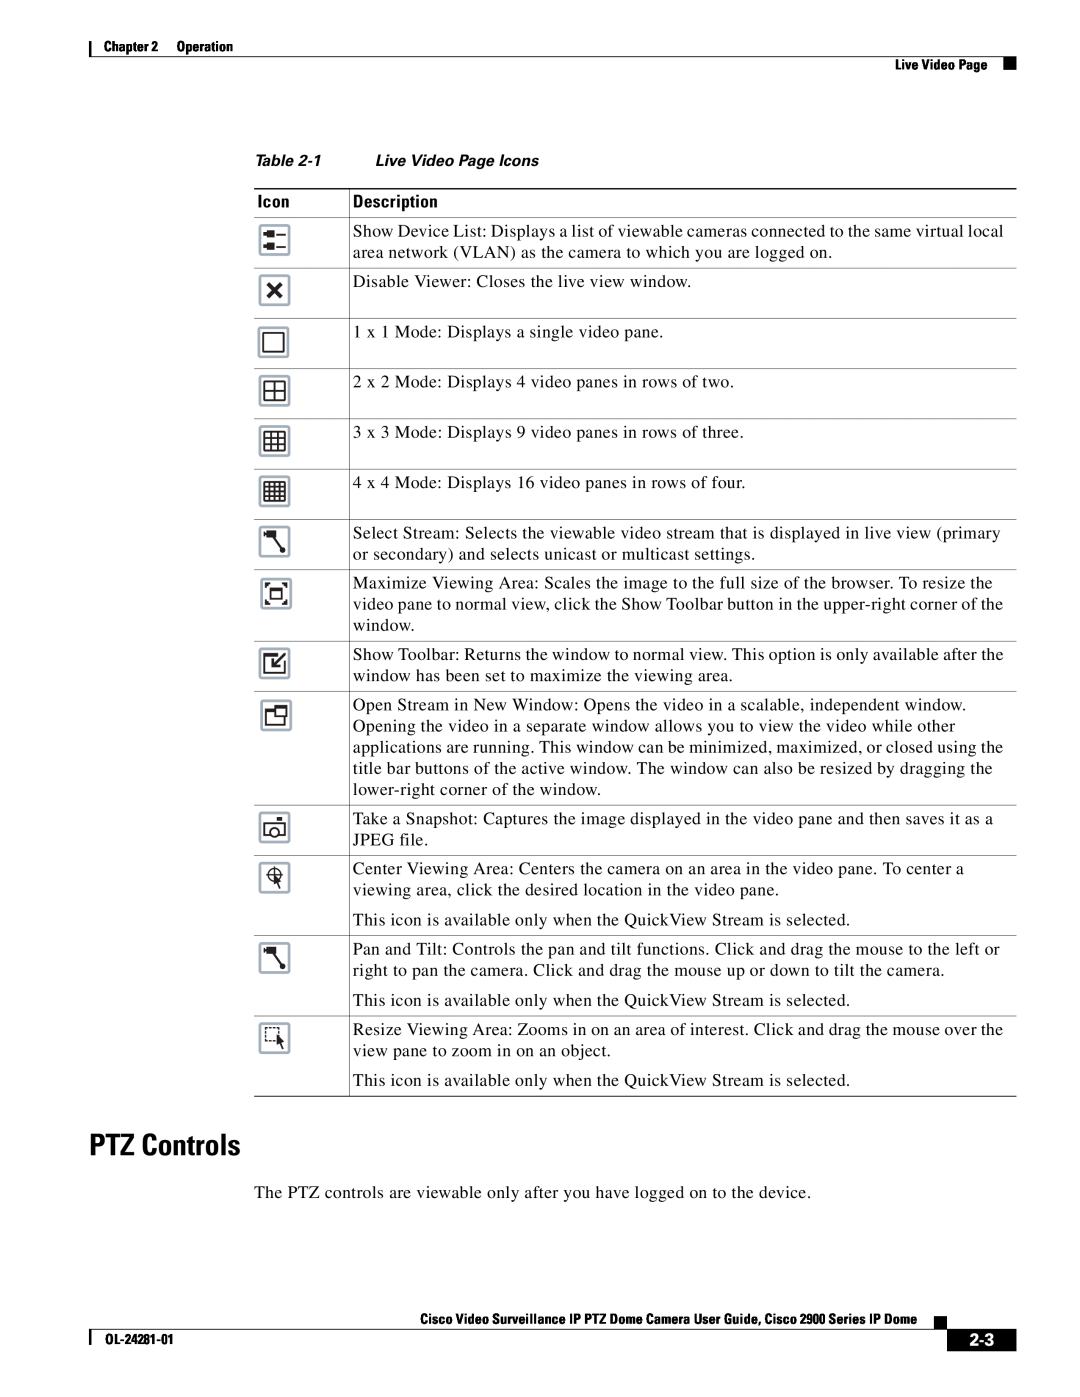 Cisco Systems 2900, OL-24281-01 manual PTZ Controls, Icon, Description 